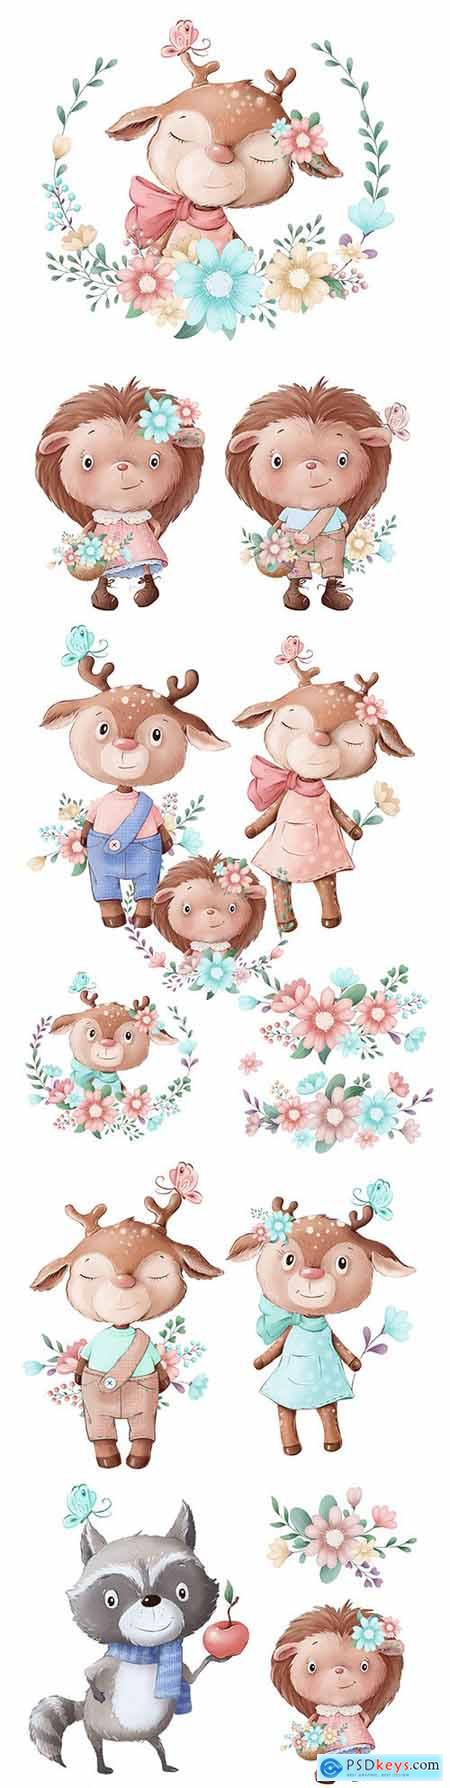 Little hedgehog and deer in wreath flowers nice illustrations